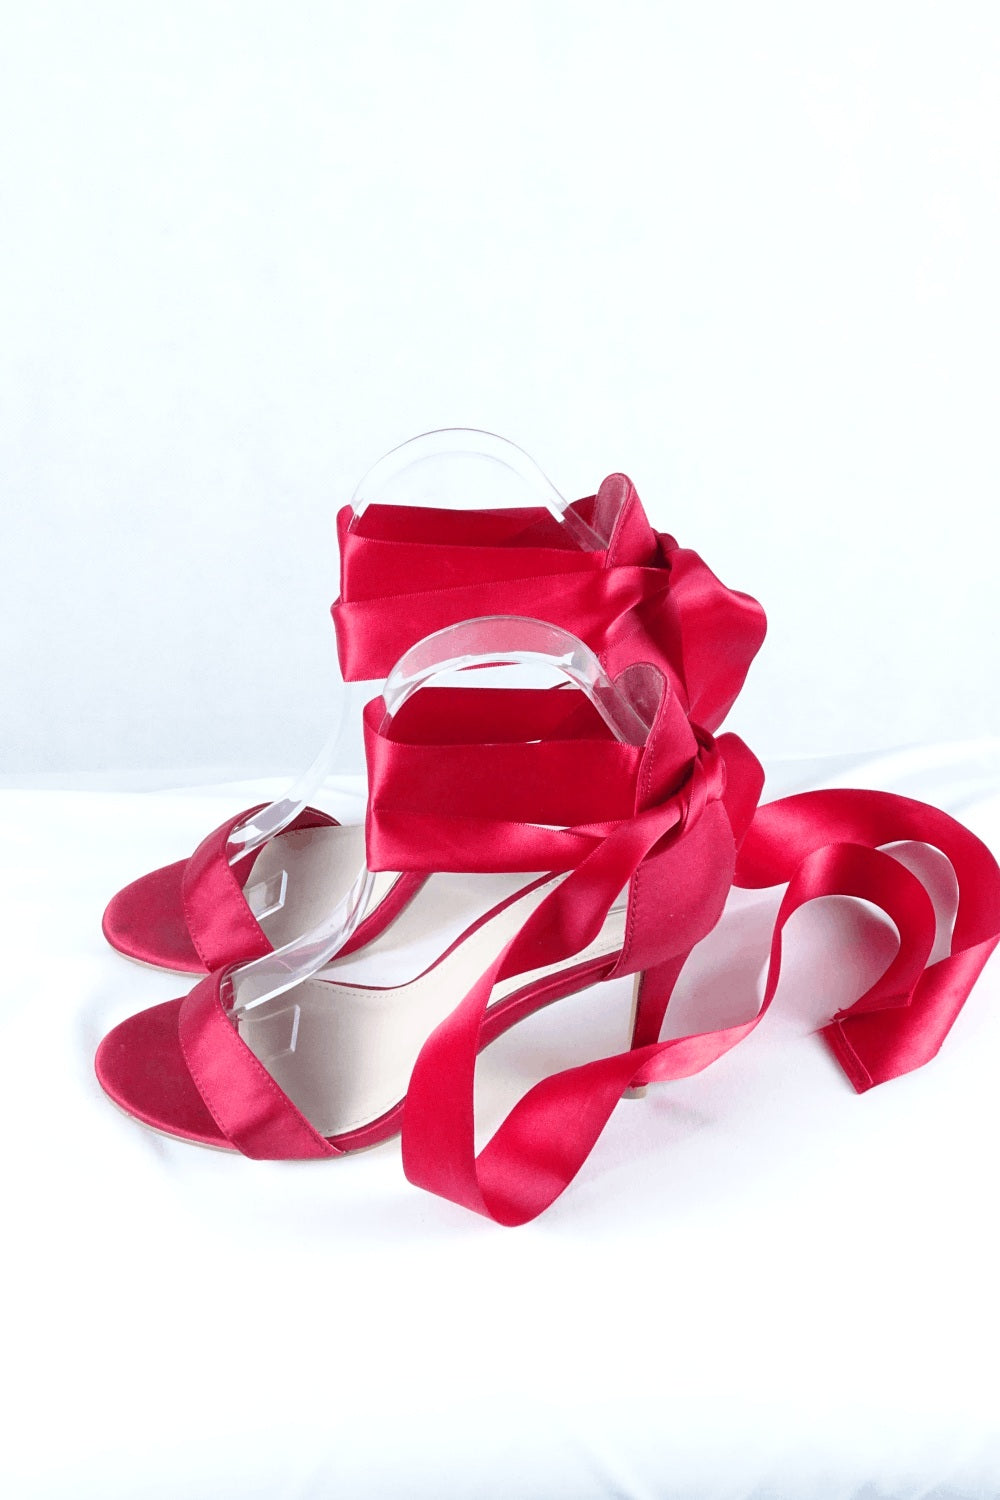 Betts Red Stilletos Shoes 7 AU